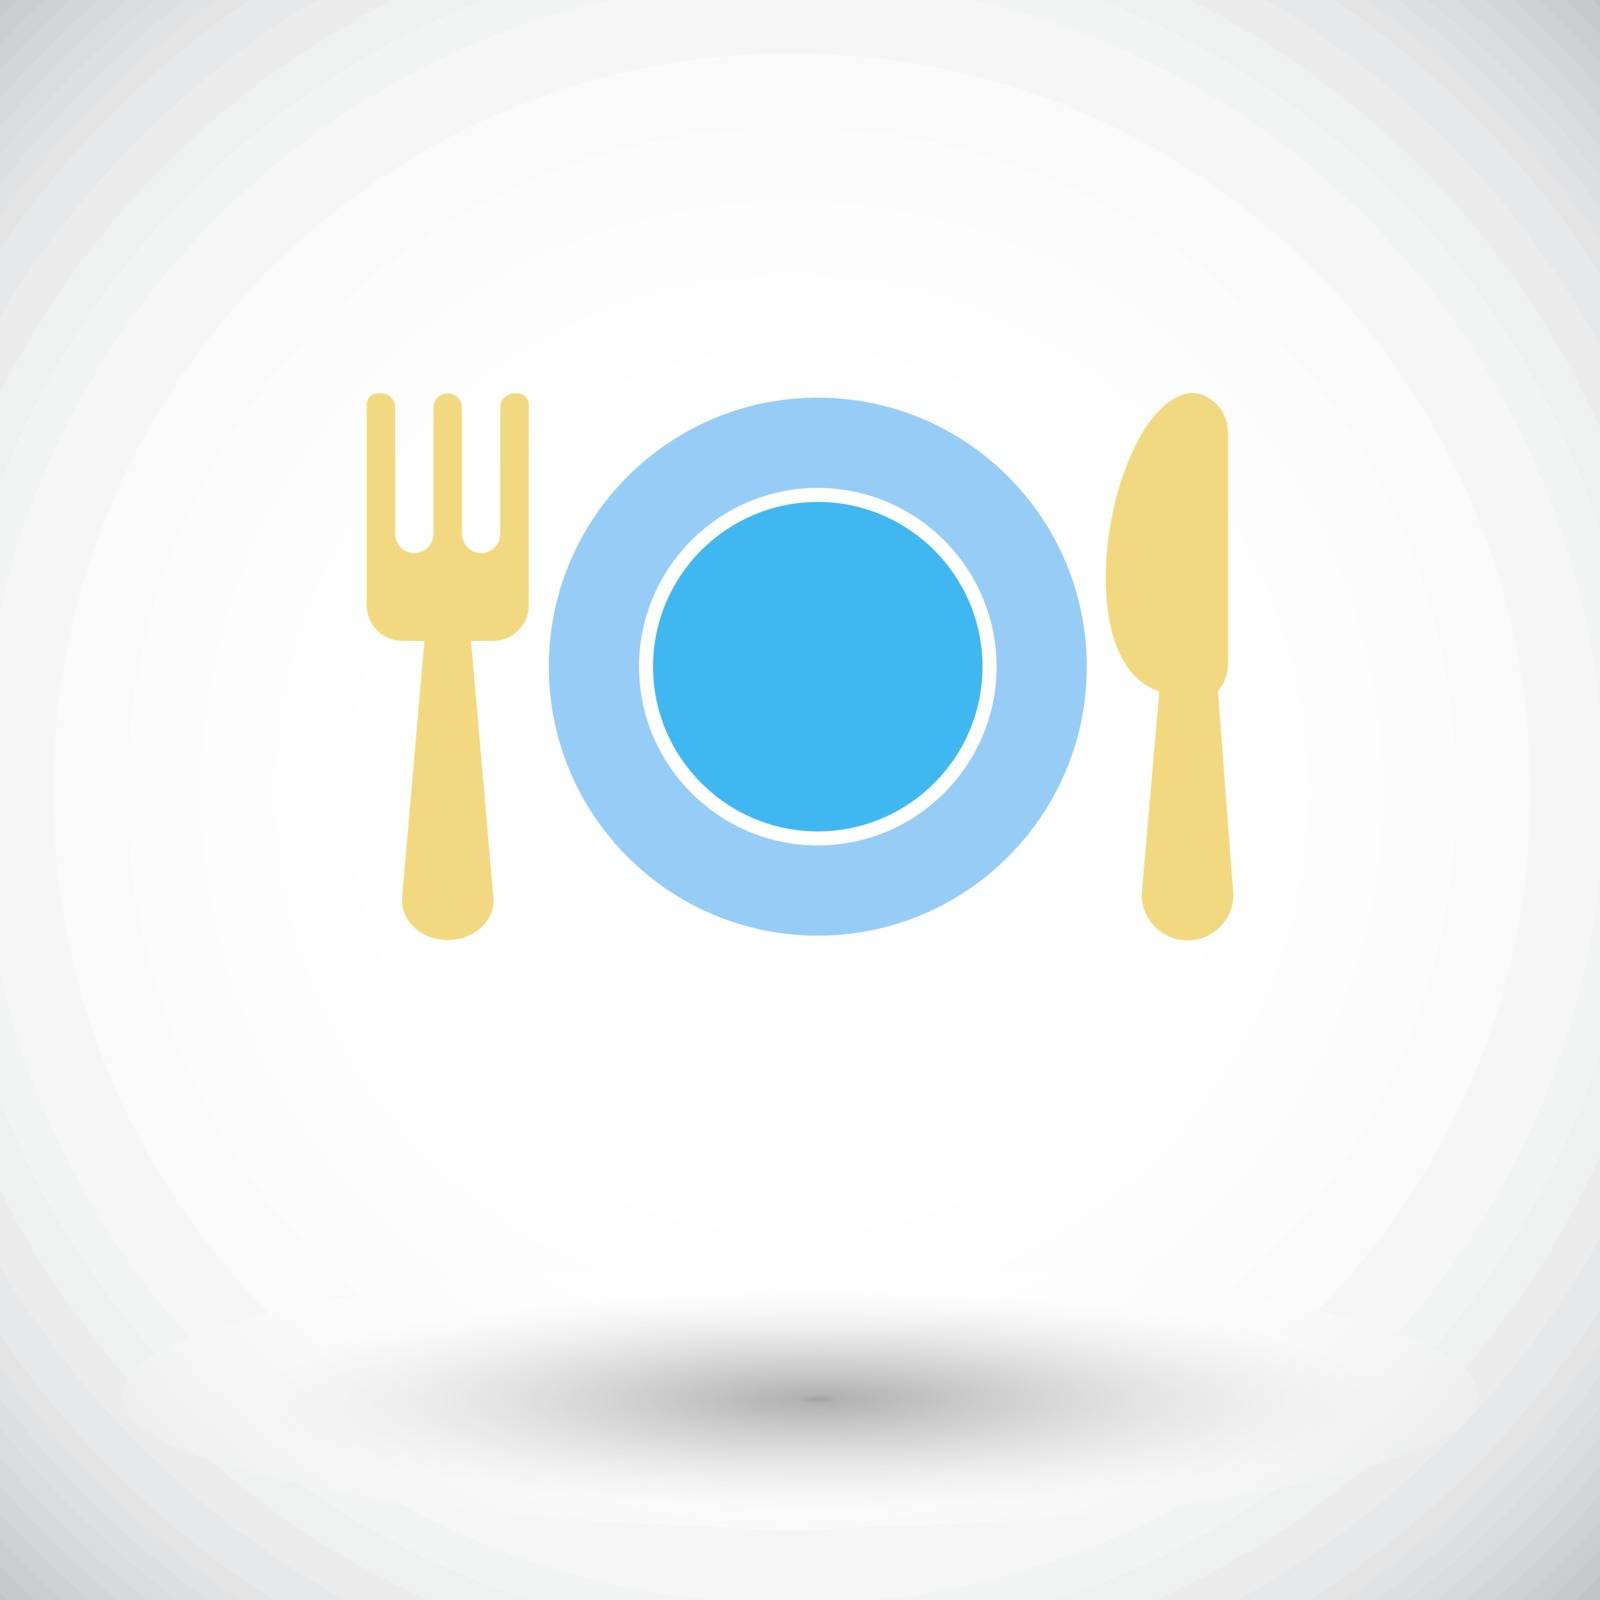 Restaurant. Single flat icon on white background. Vector illustration.